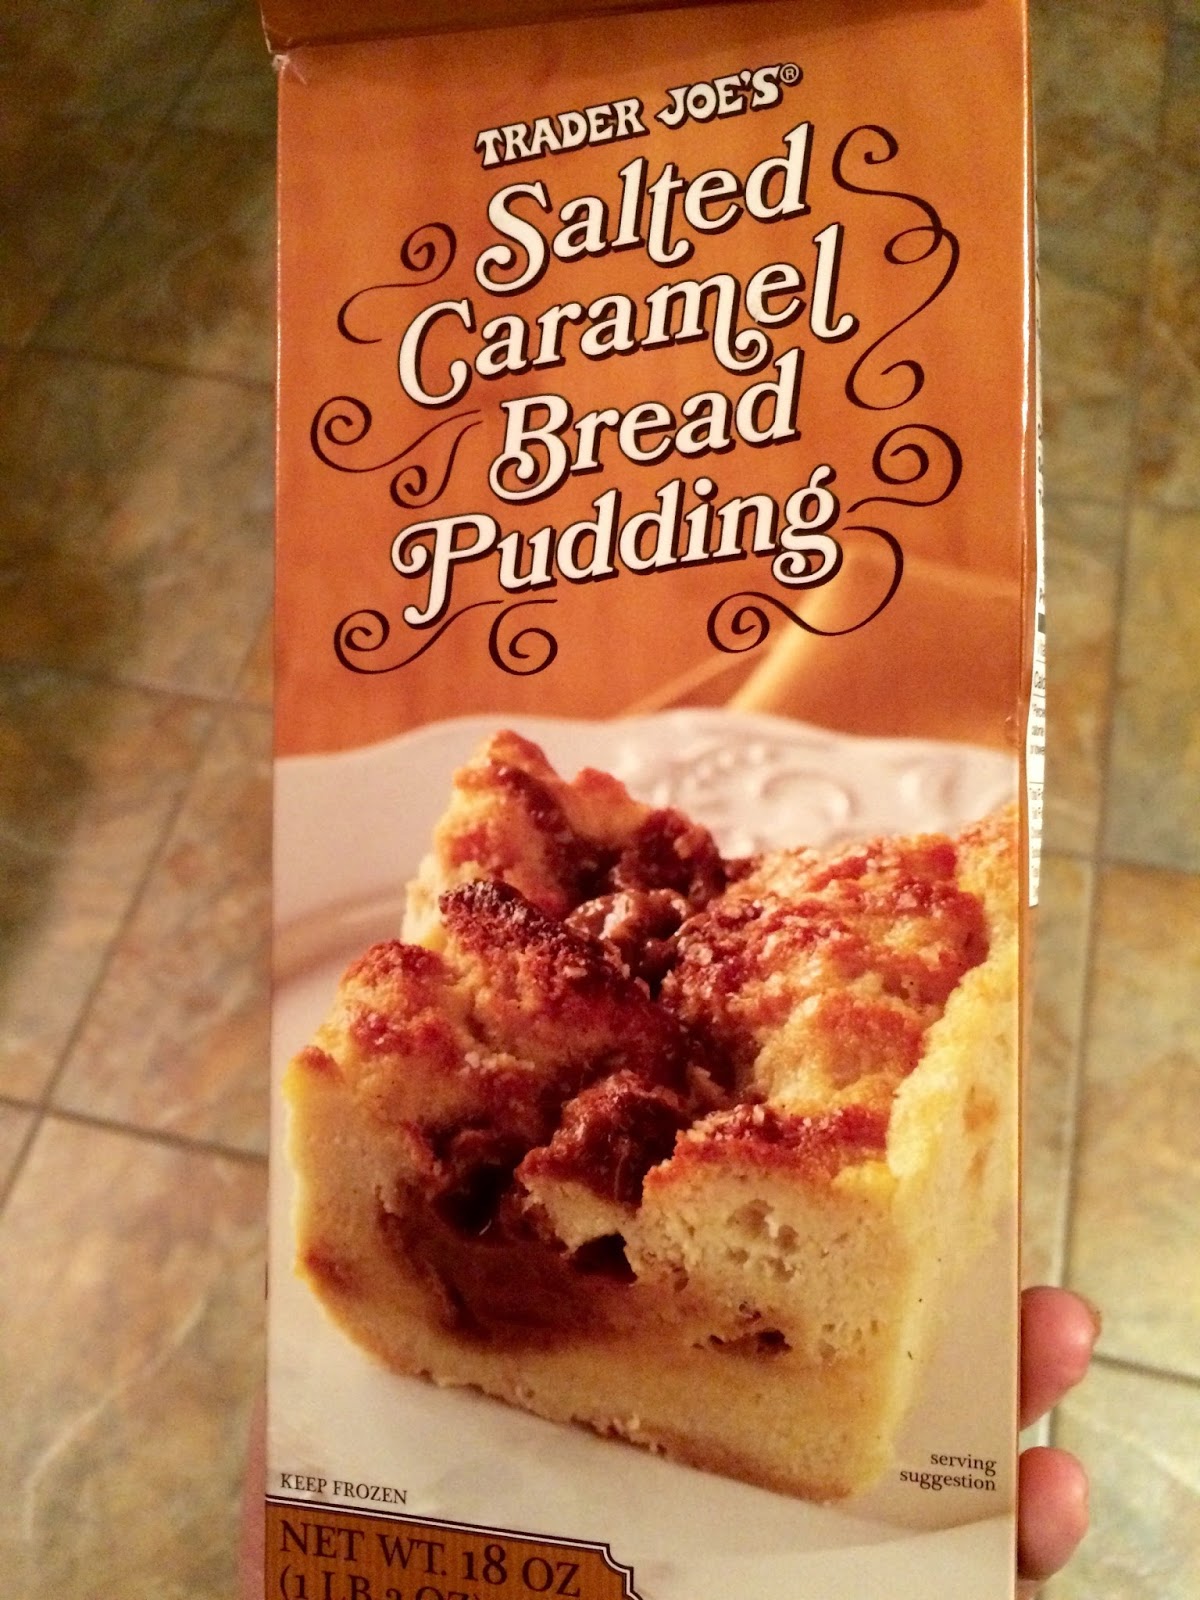 Genuine Mamas: Salted Caramel Bread Pudding (Trader Joe's)